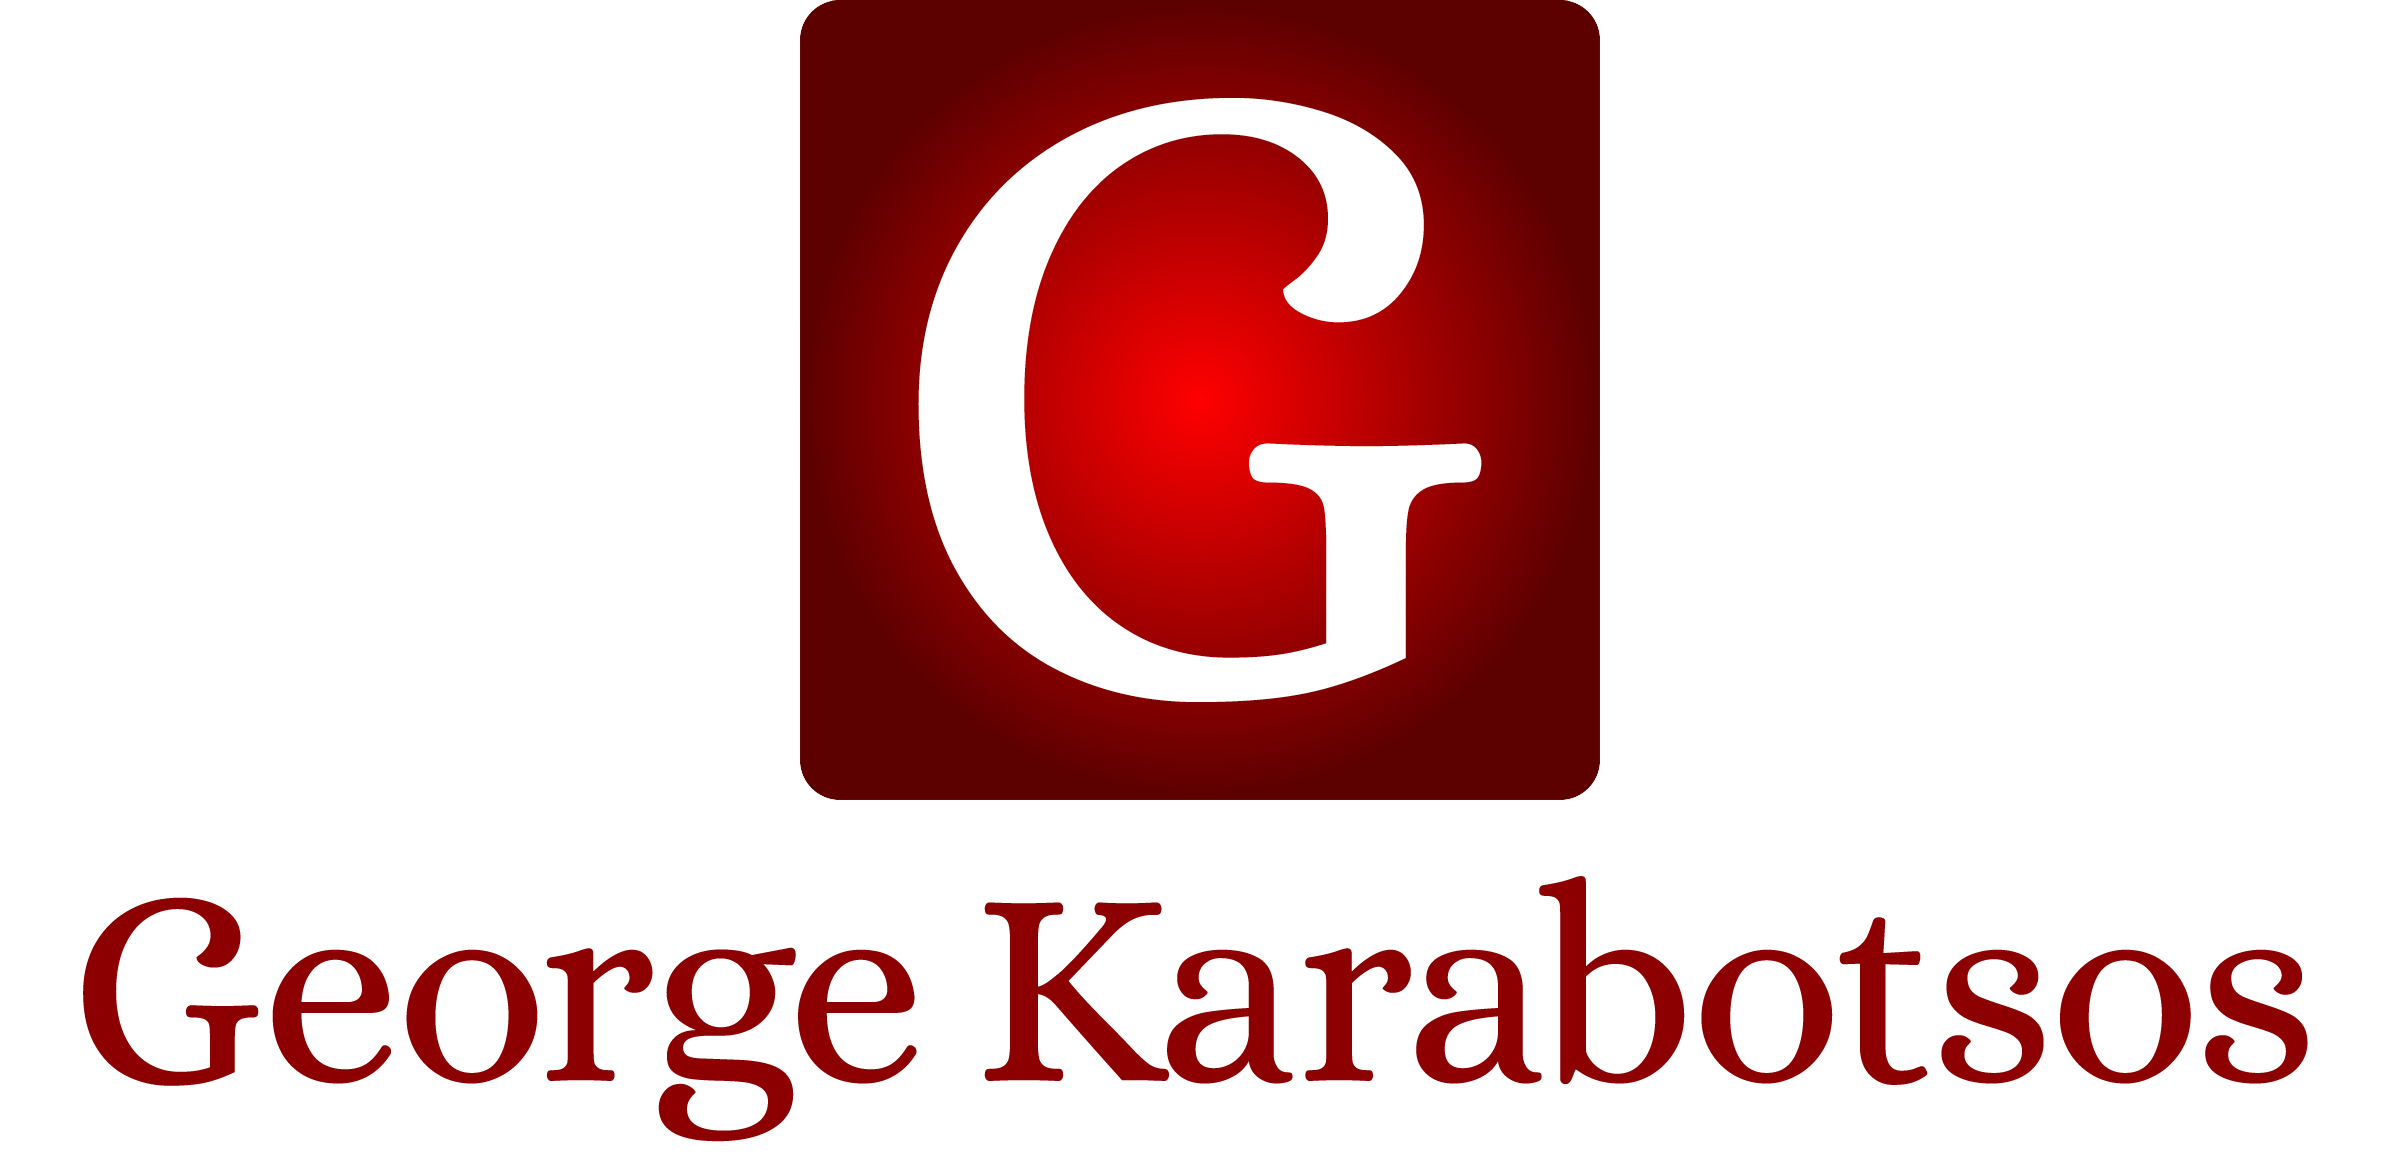 George Karabotsos